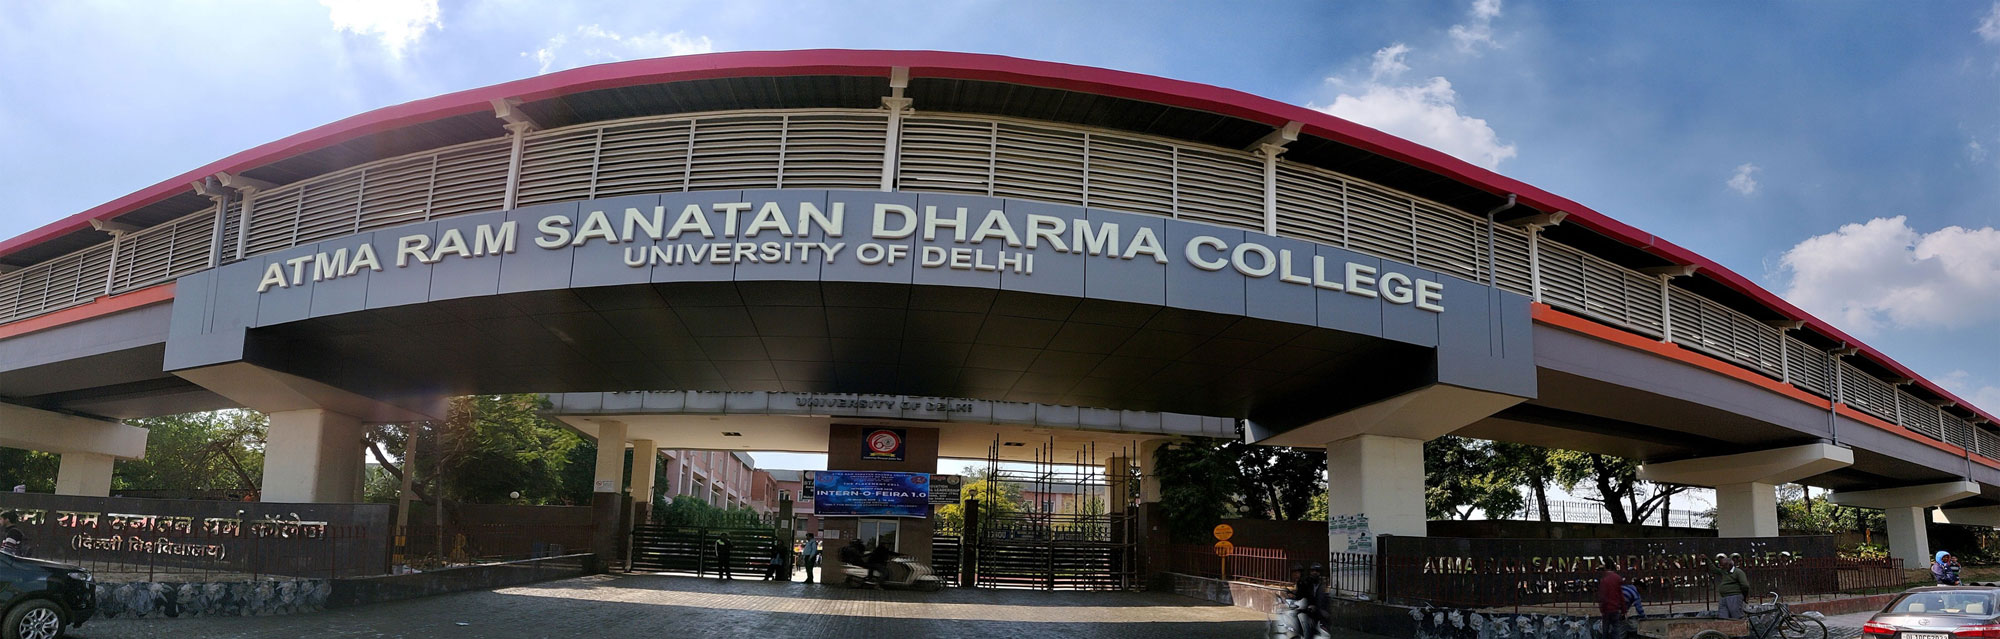 Atma Ram Sanatan Dharma College, New Delhi Image